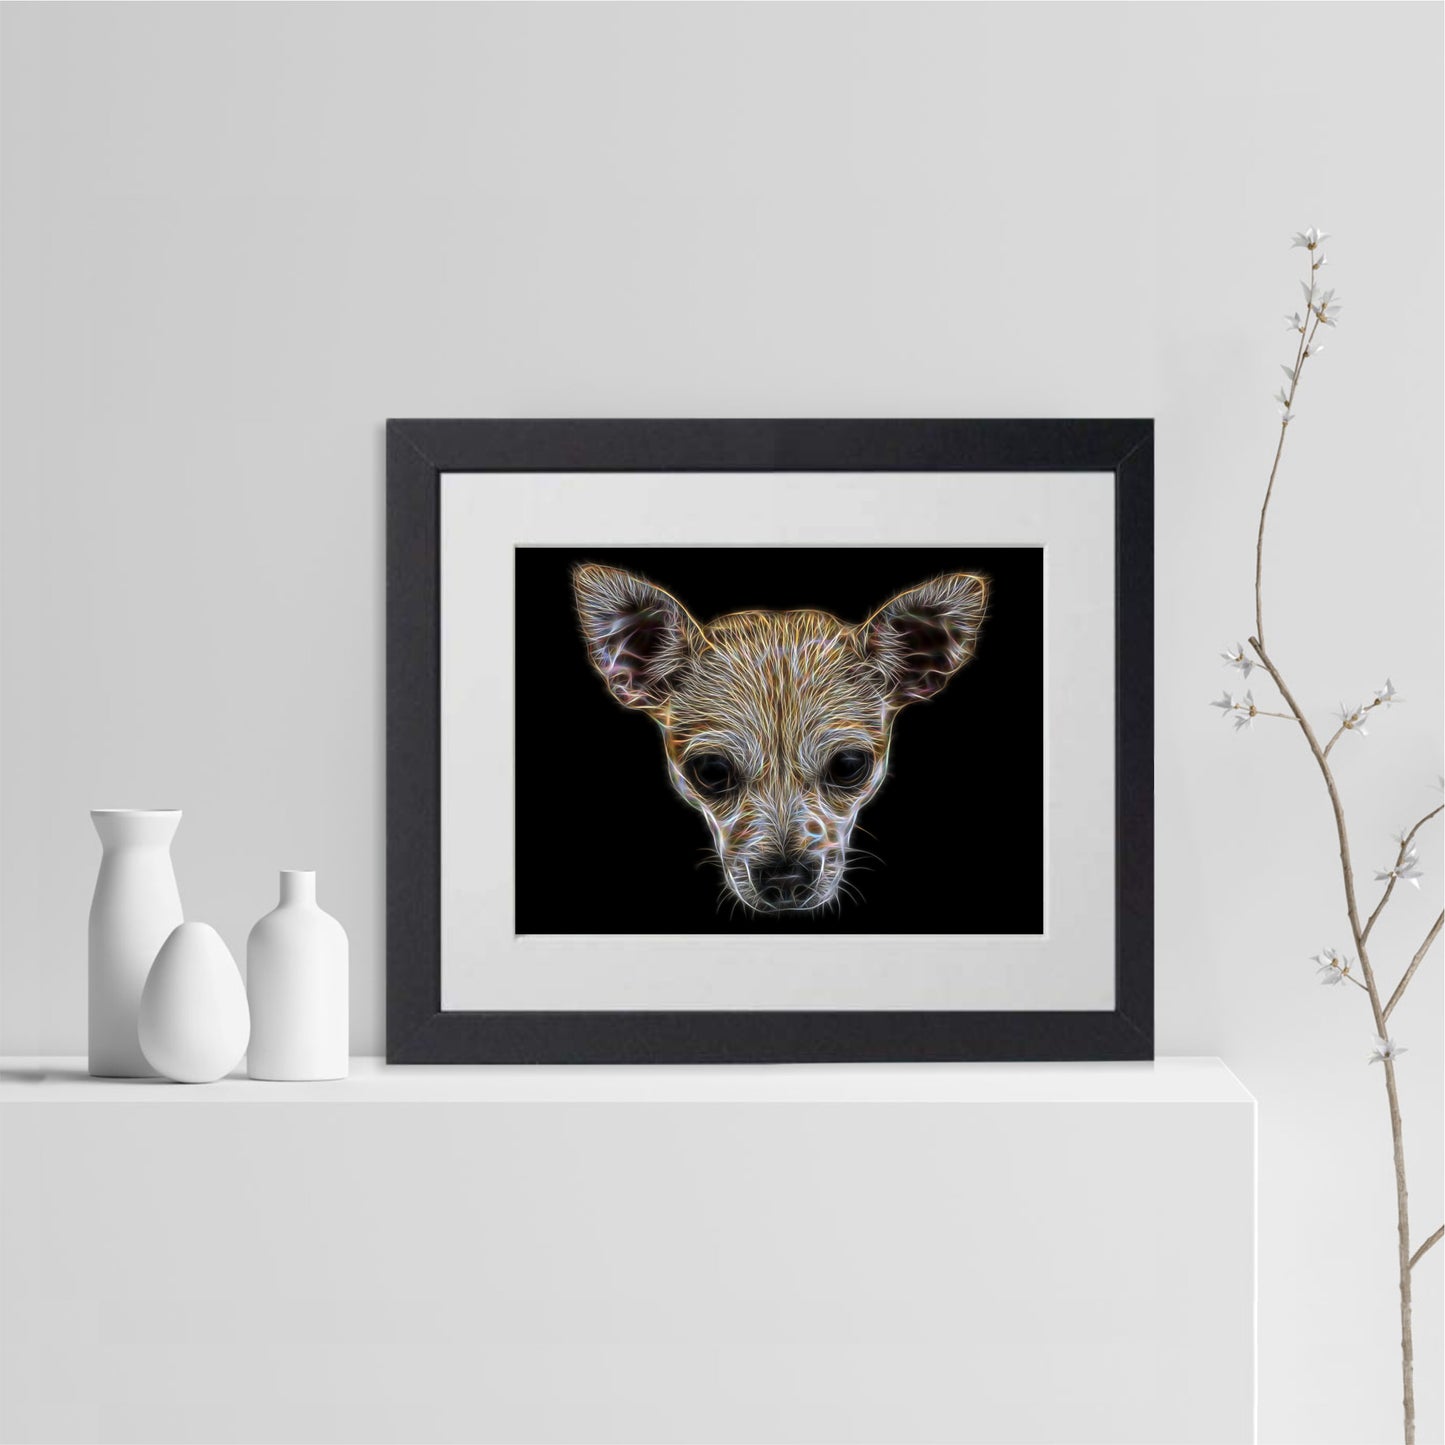 Cream Chihuahua Print with Stunning Fractal Art Design.